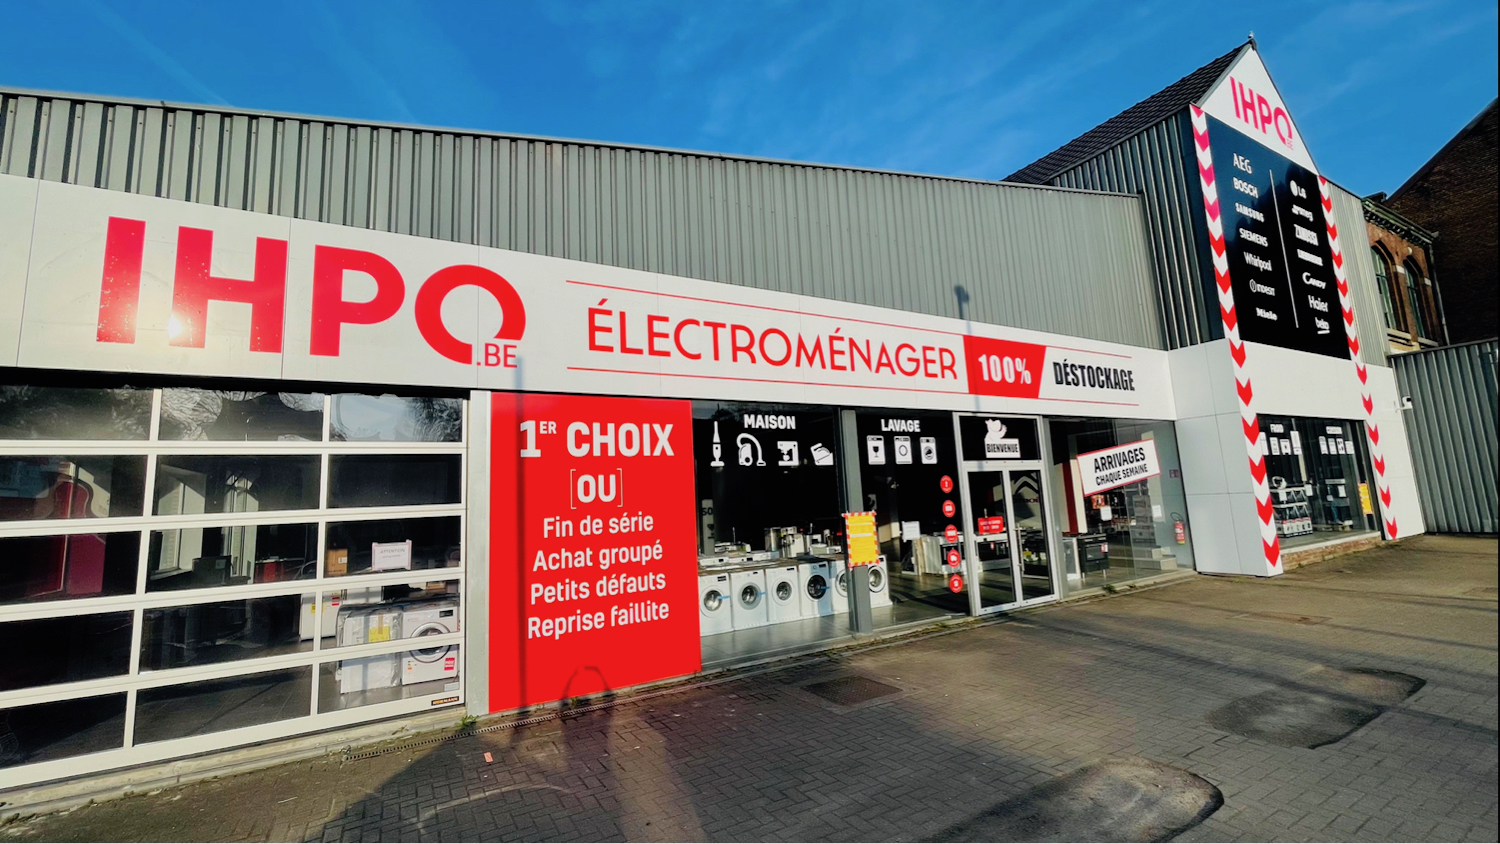 magasin IHPO à Verviers